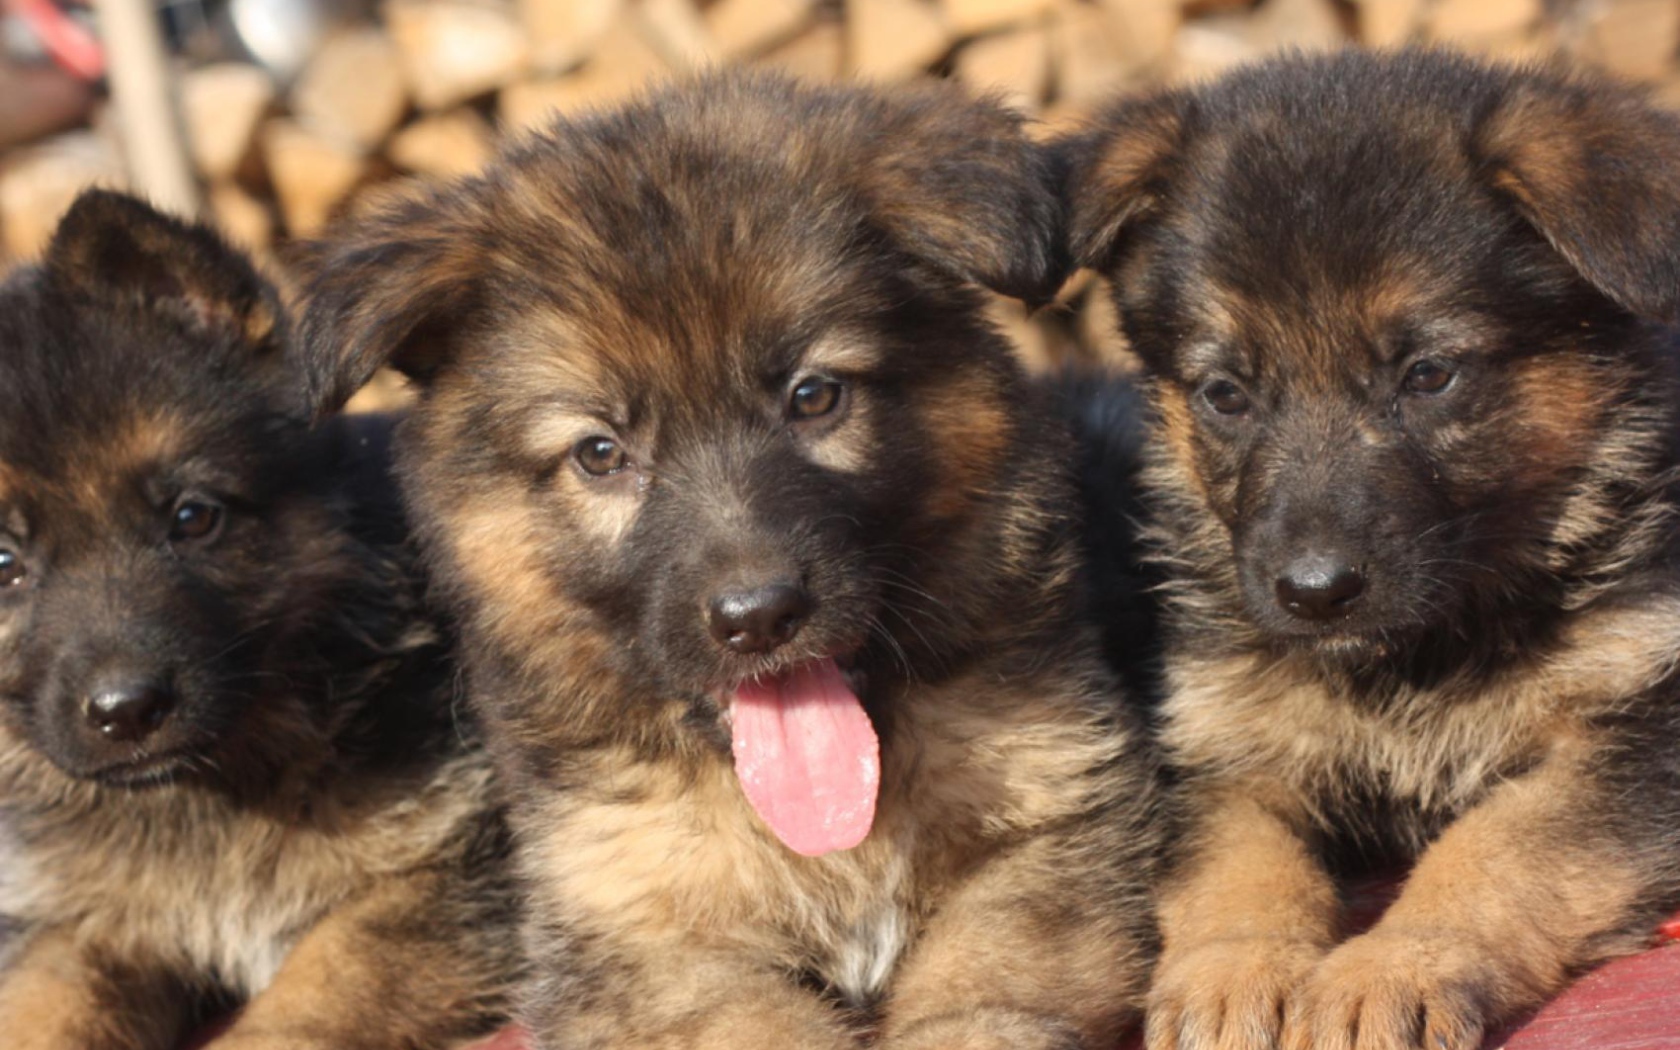 Three German Shepherd puppy